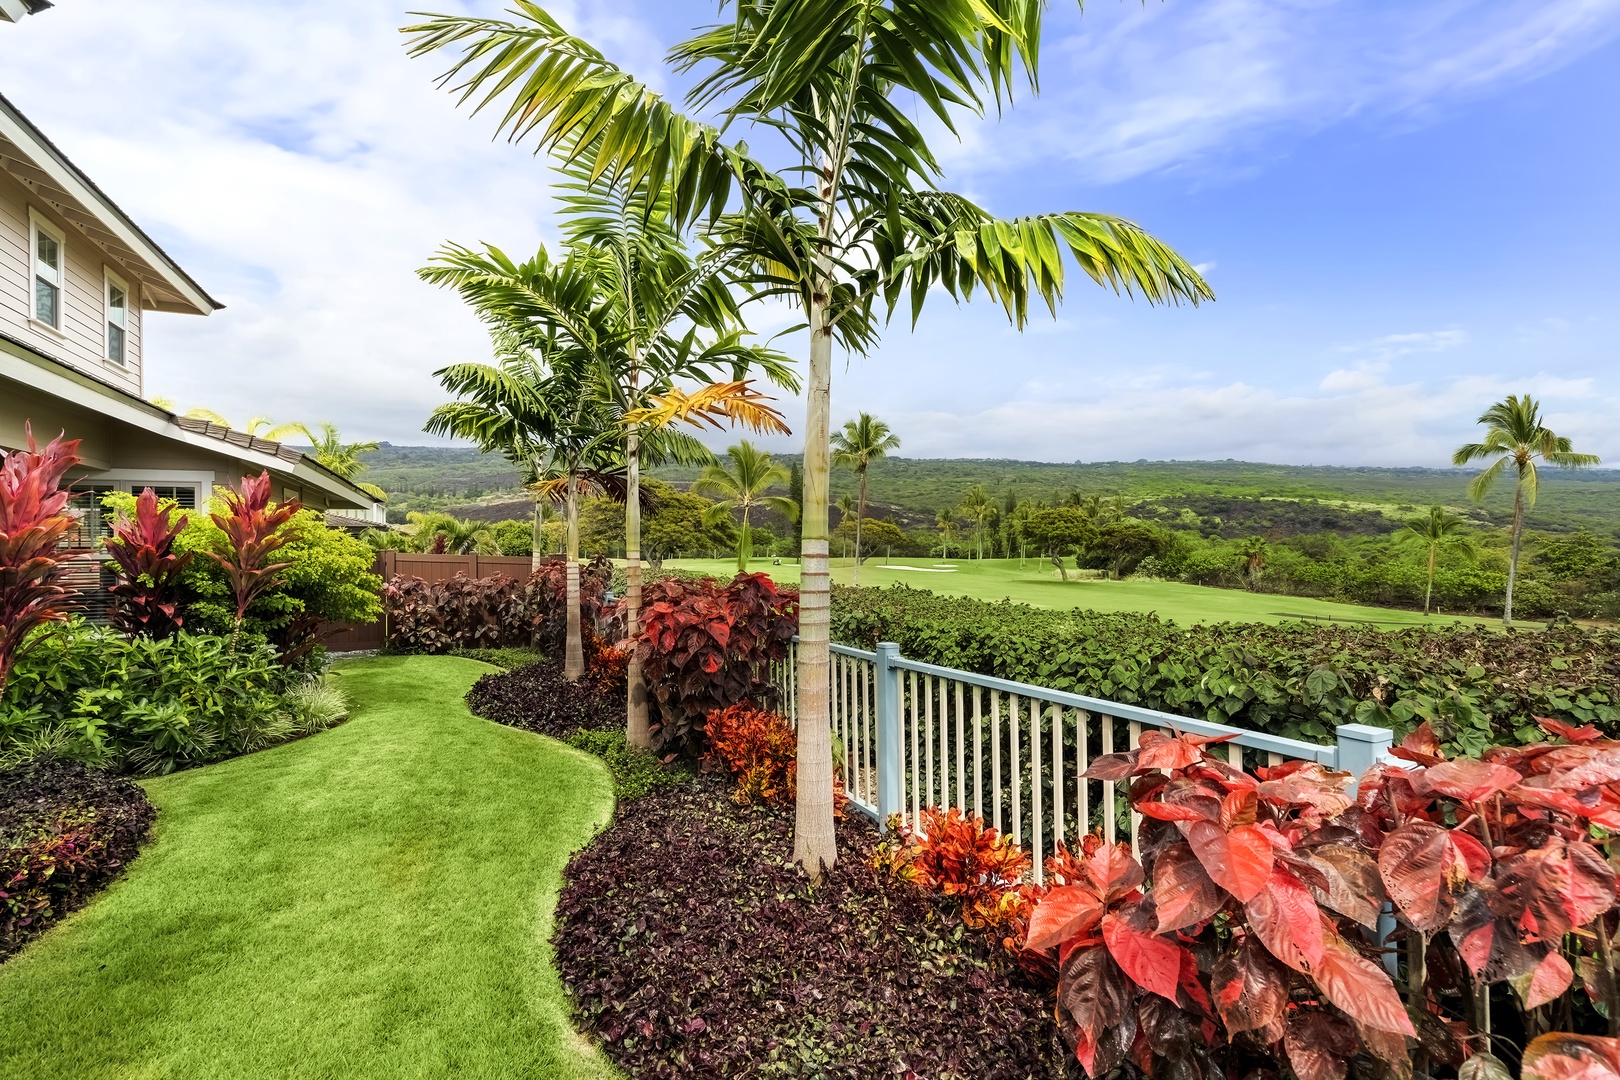 Kailua Kona Vacation Rentals, Golf Green - Side yard for activities